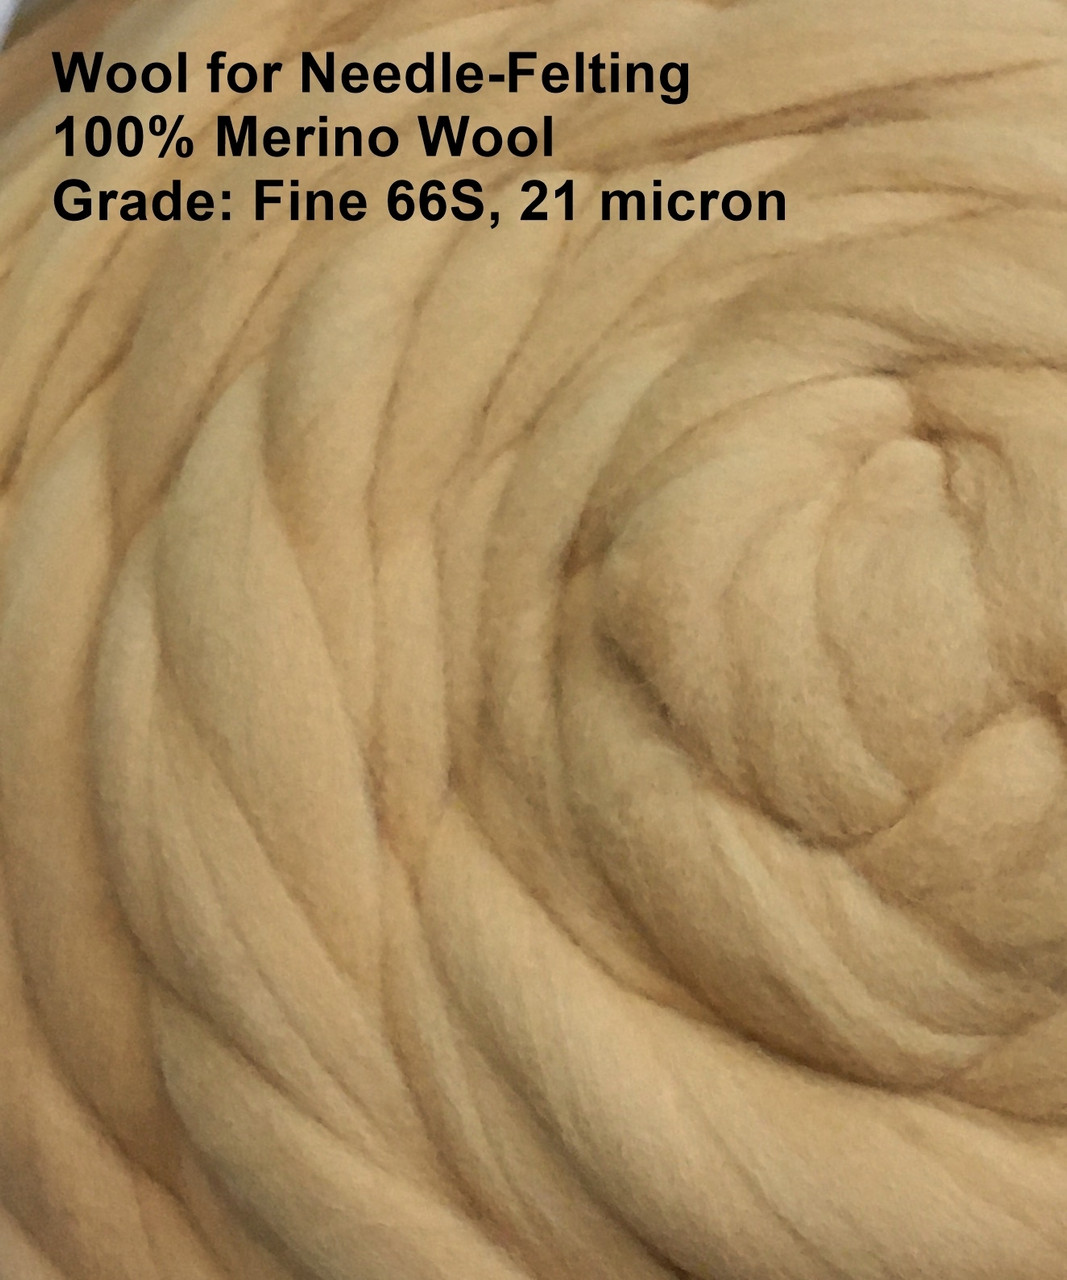 HR053-500 MOREZMORE LIGHT TAN FLESH SKIN TONE 500g 100% Merino Fine Wool  Roving 66S